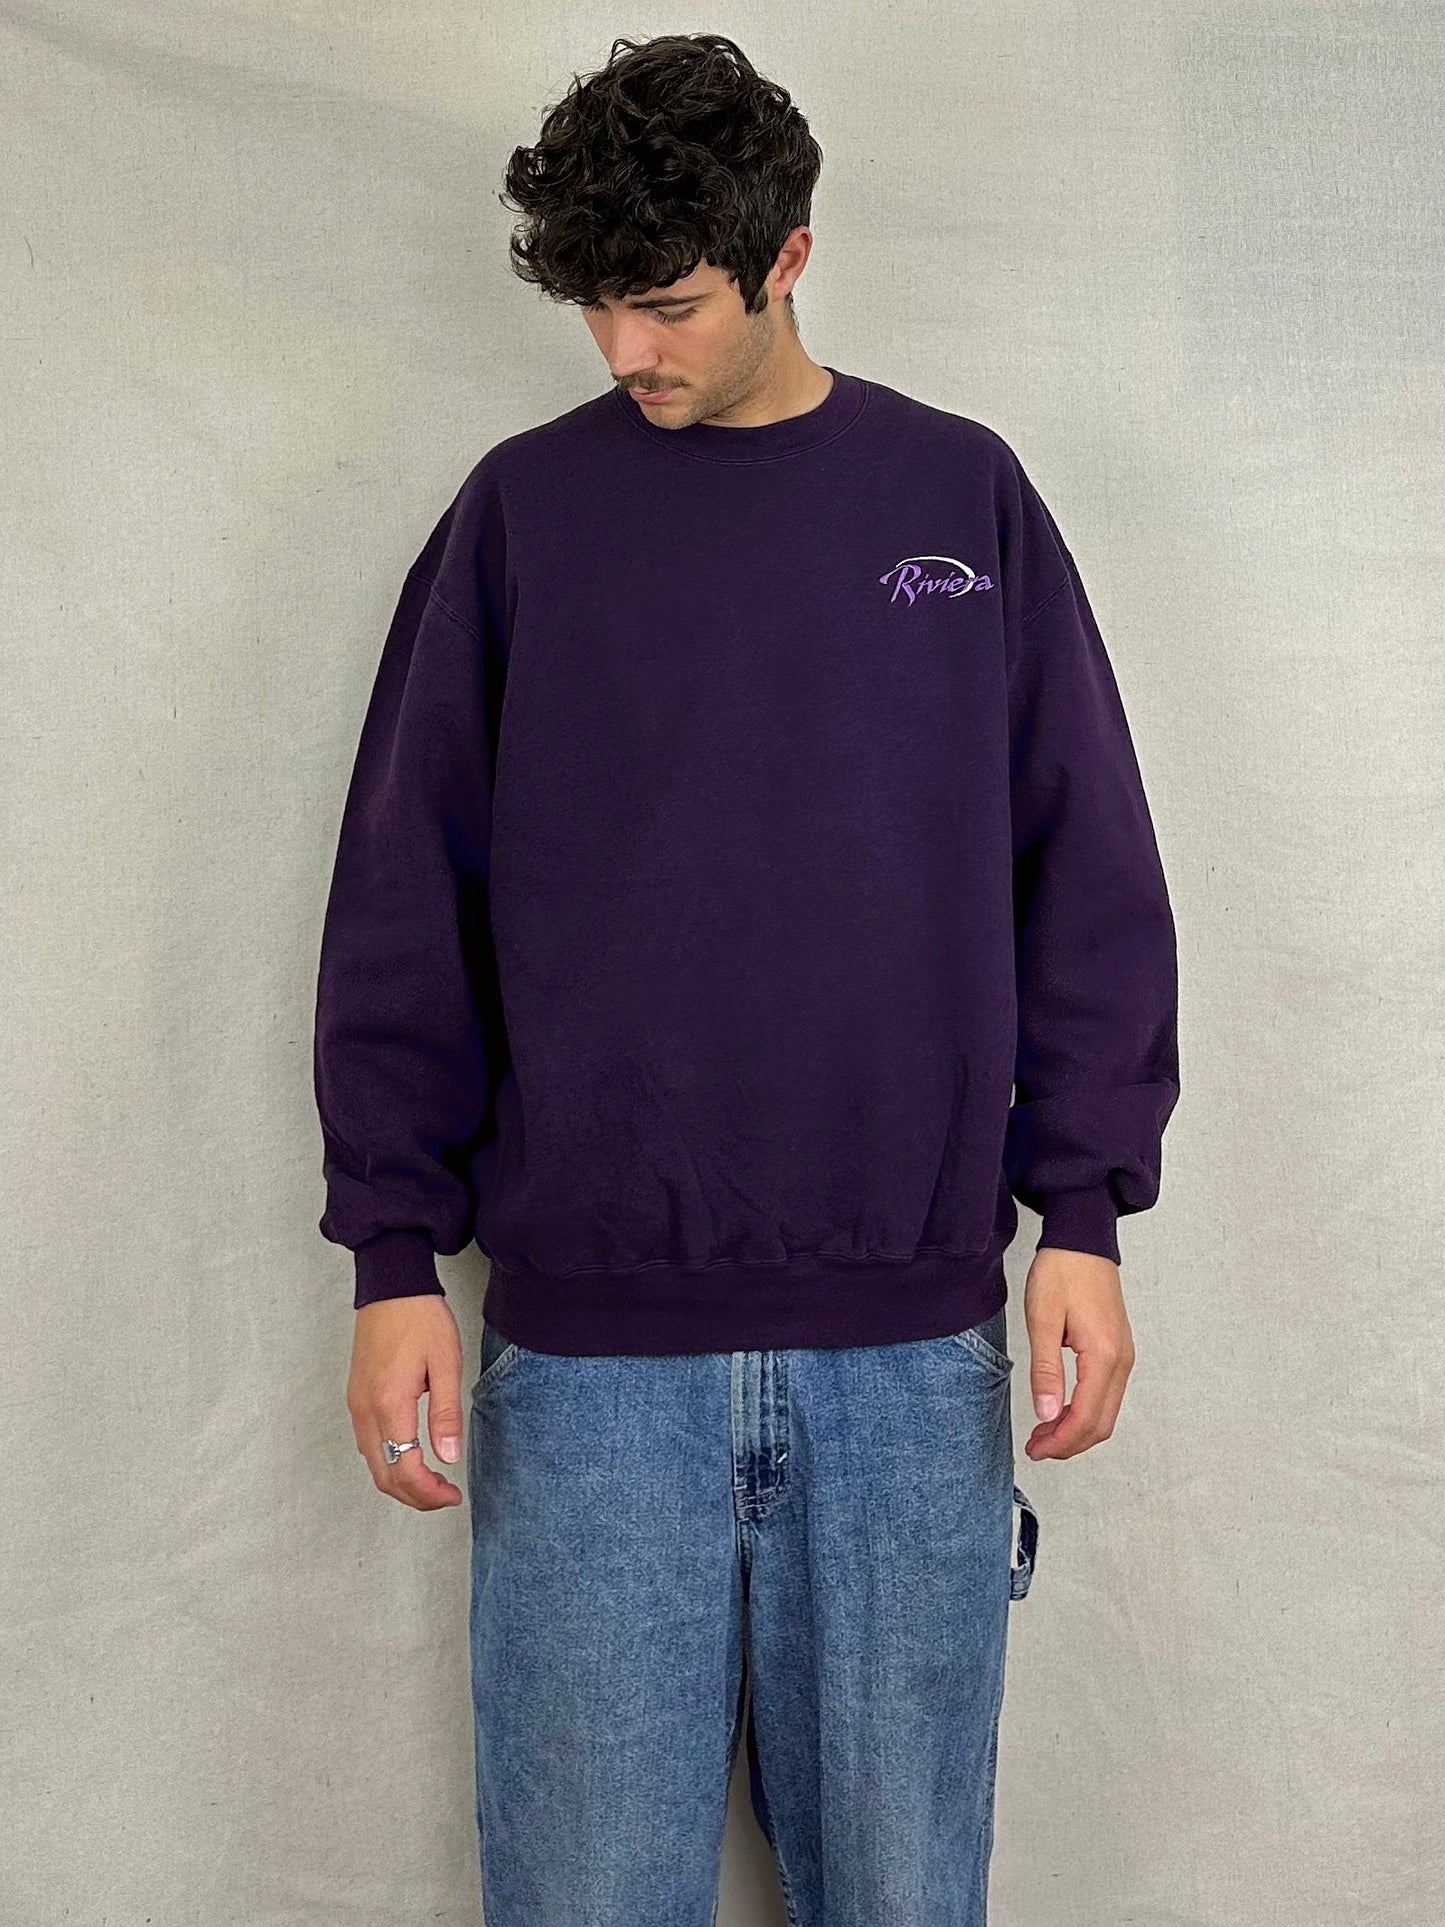 90's Riviera USA Made Embroidered Vintage Sweatshirt Size L-XL